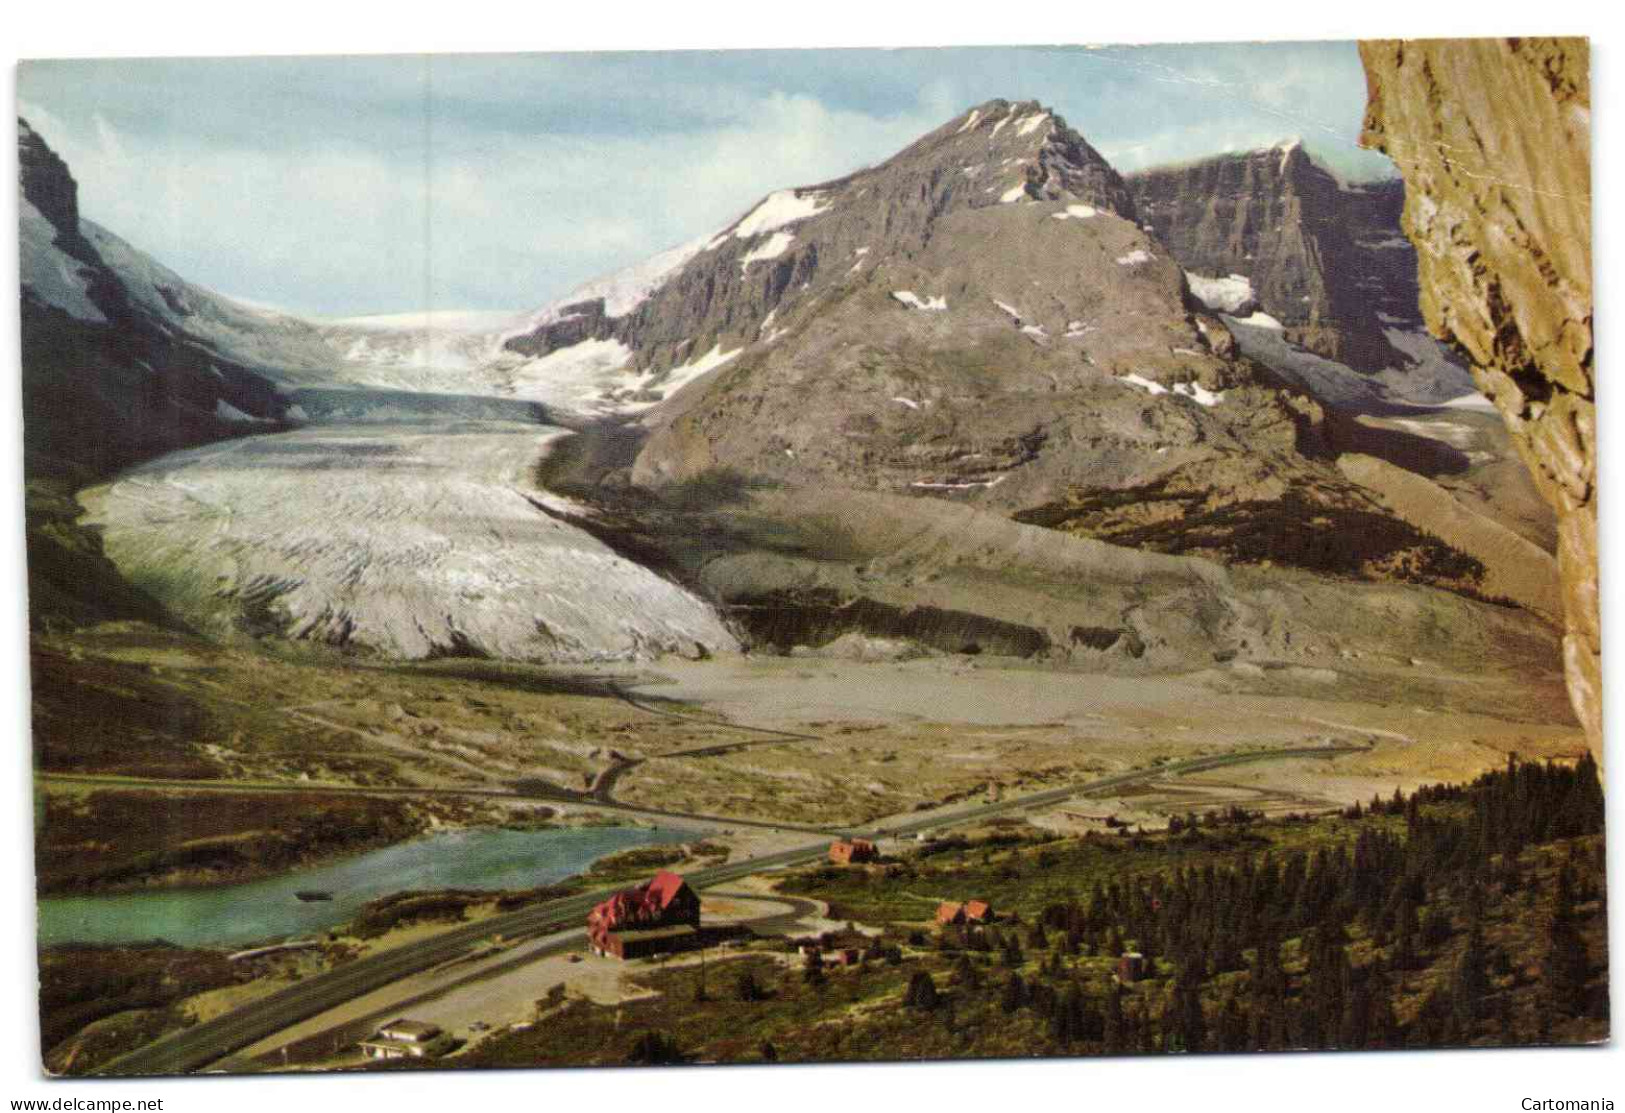 Jasper National Park - Athabaska Glacier - The Columbia Icefields With The Columbia Icefields Chalet In The Foreggground - Jasper